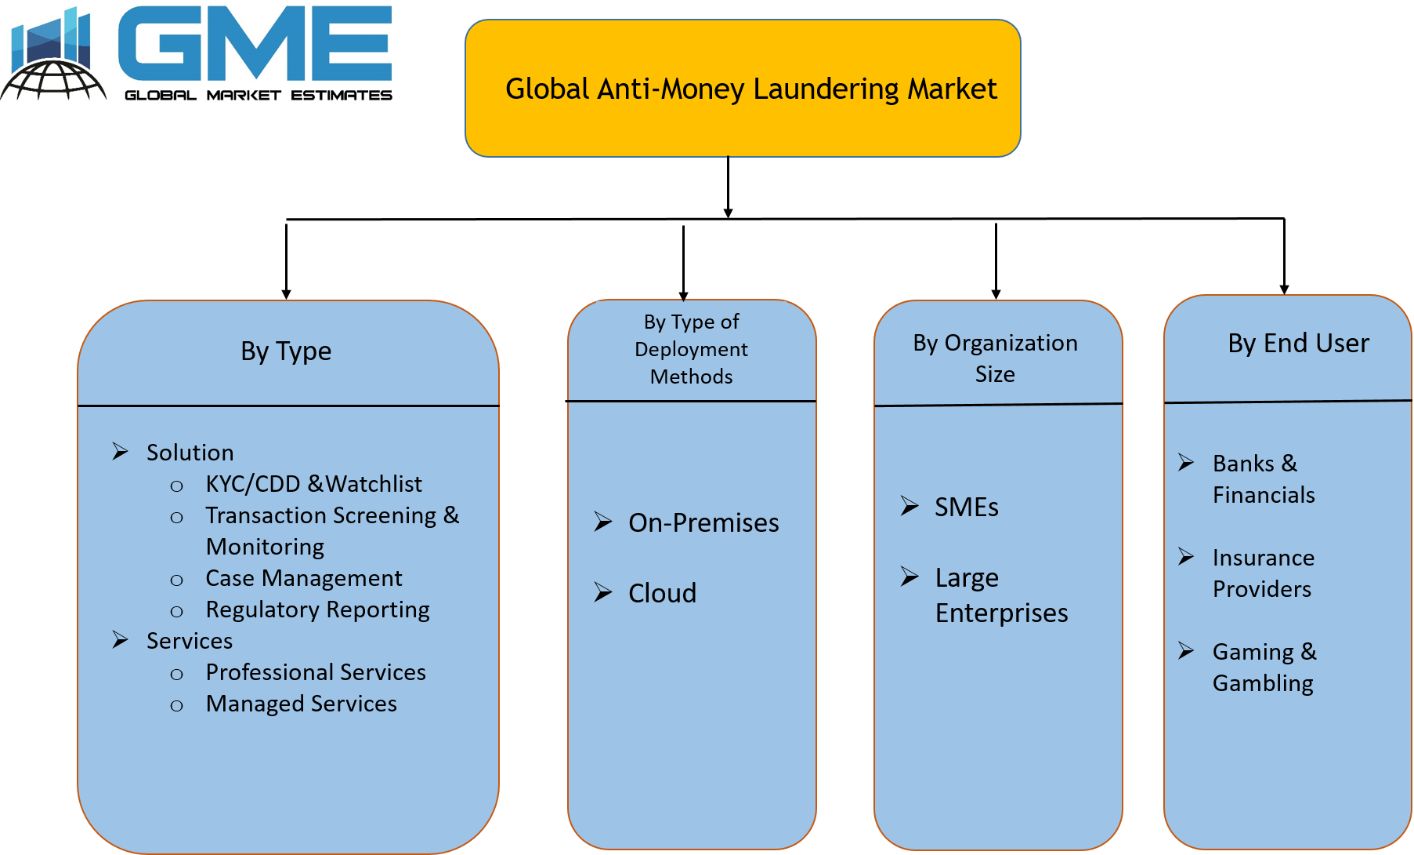 Global Anti-Money Laundering Market Segmentation